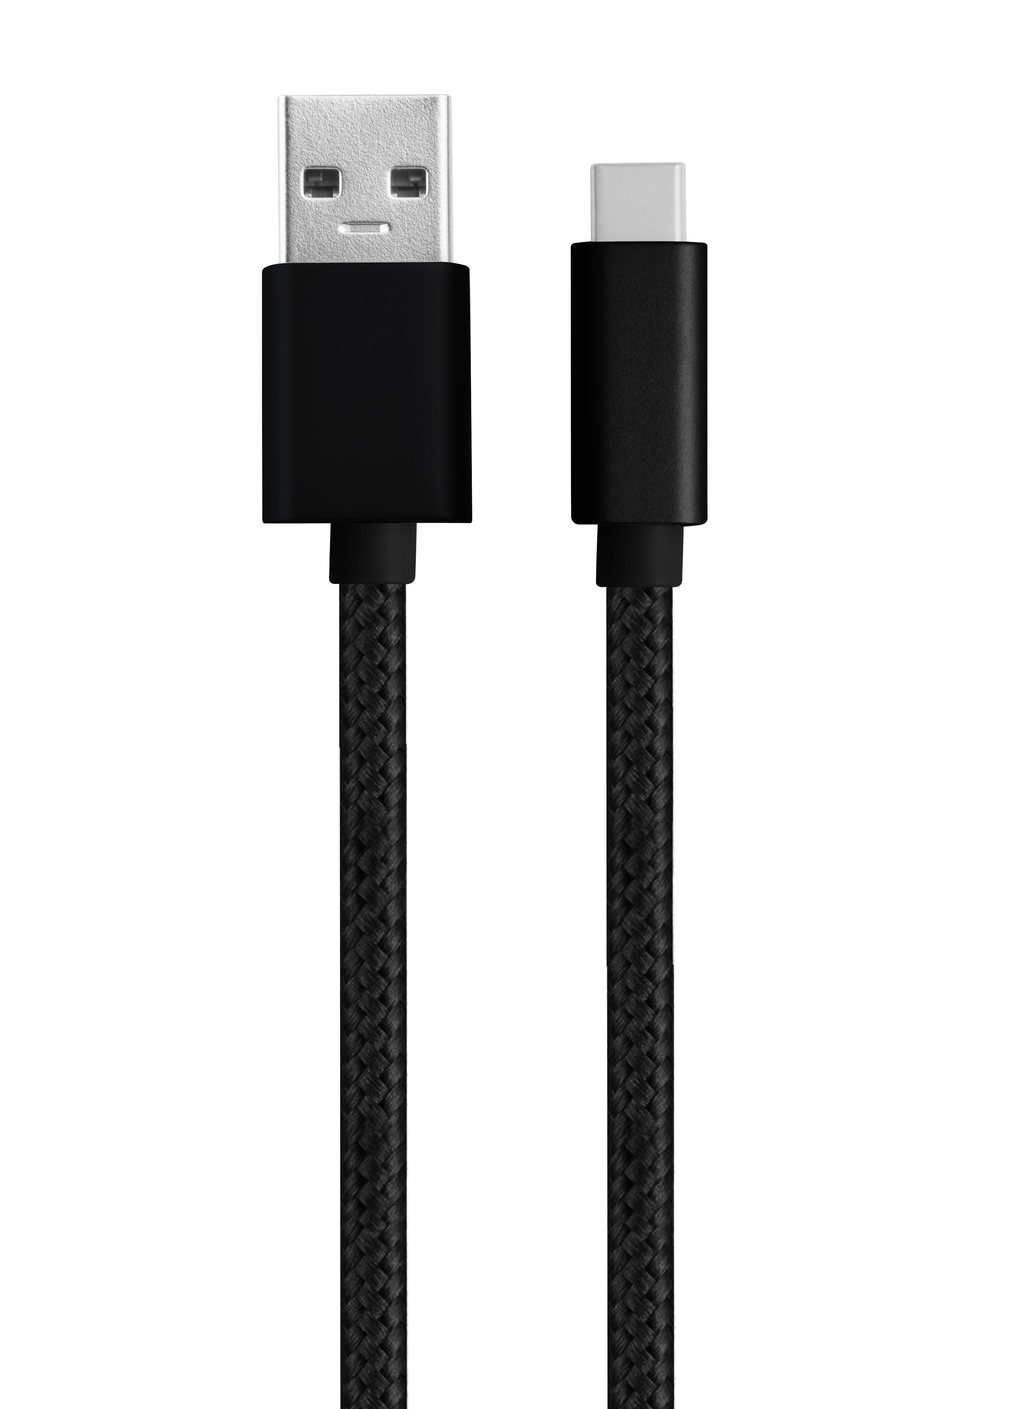 NÖRDIC USBC-MF1 Adaptateur USB-C vers USB-C Angle Droit - USB-C3.1